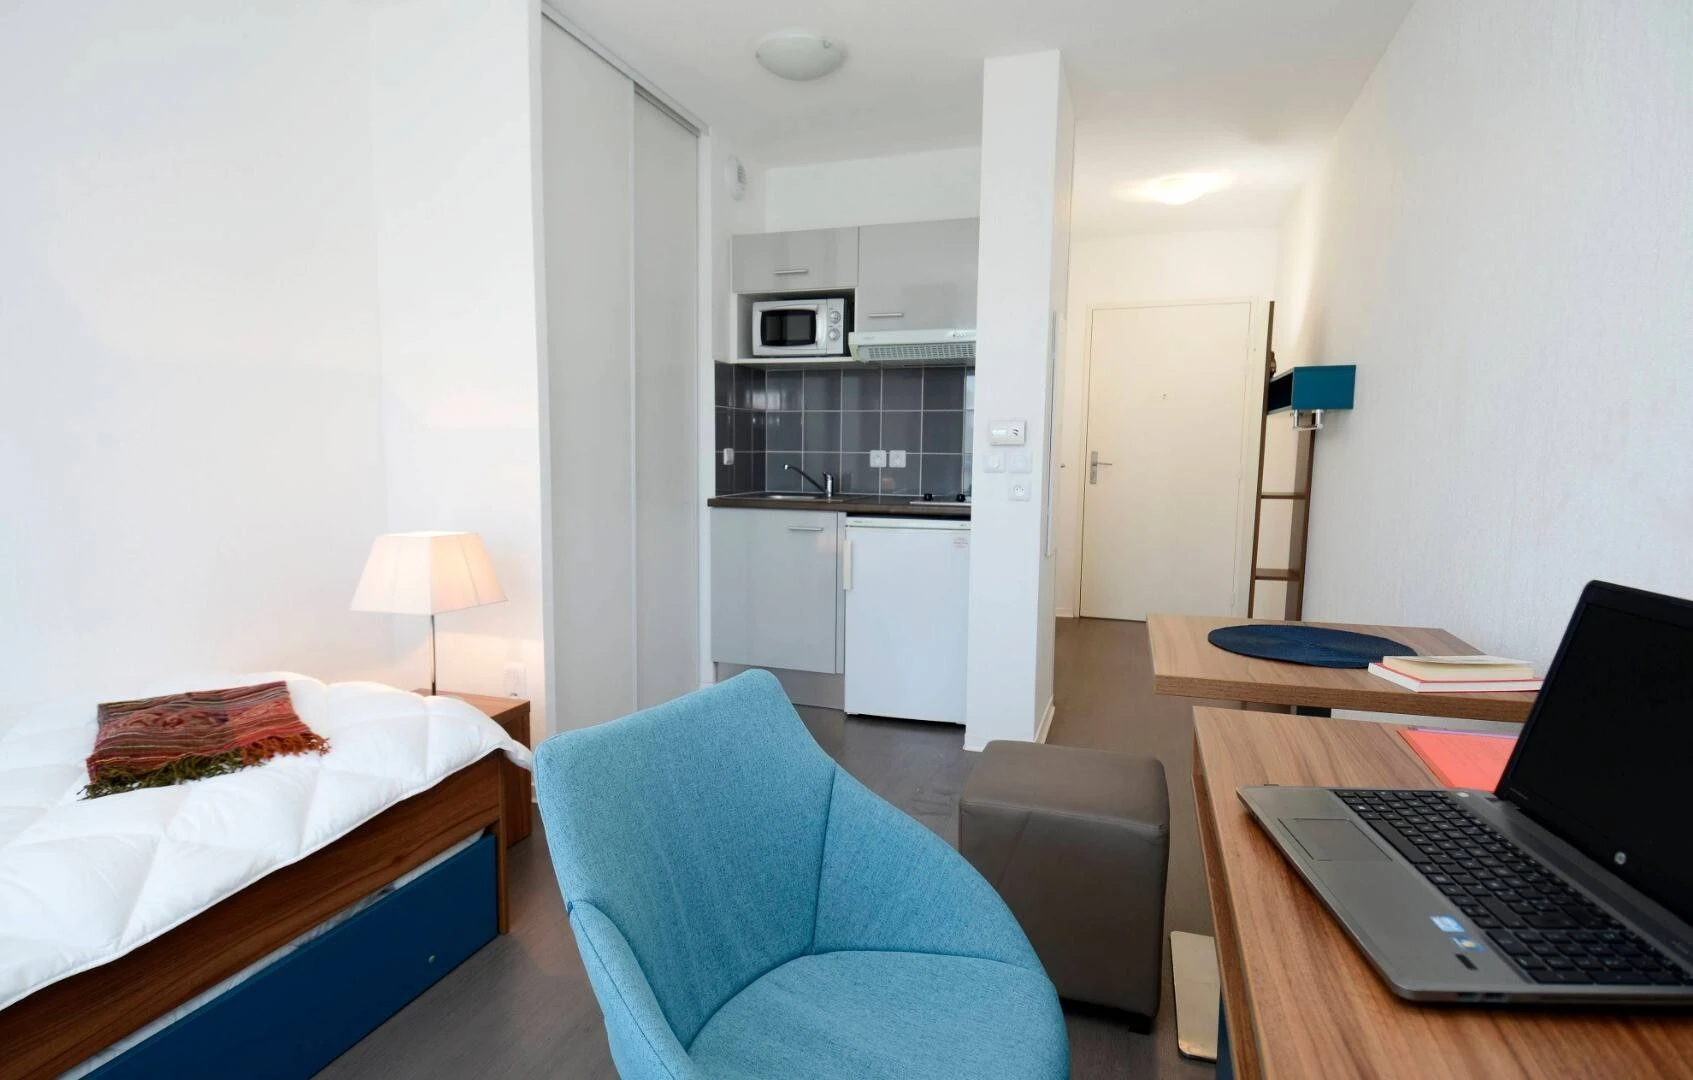 Cheap private room in perpignan